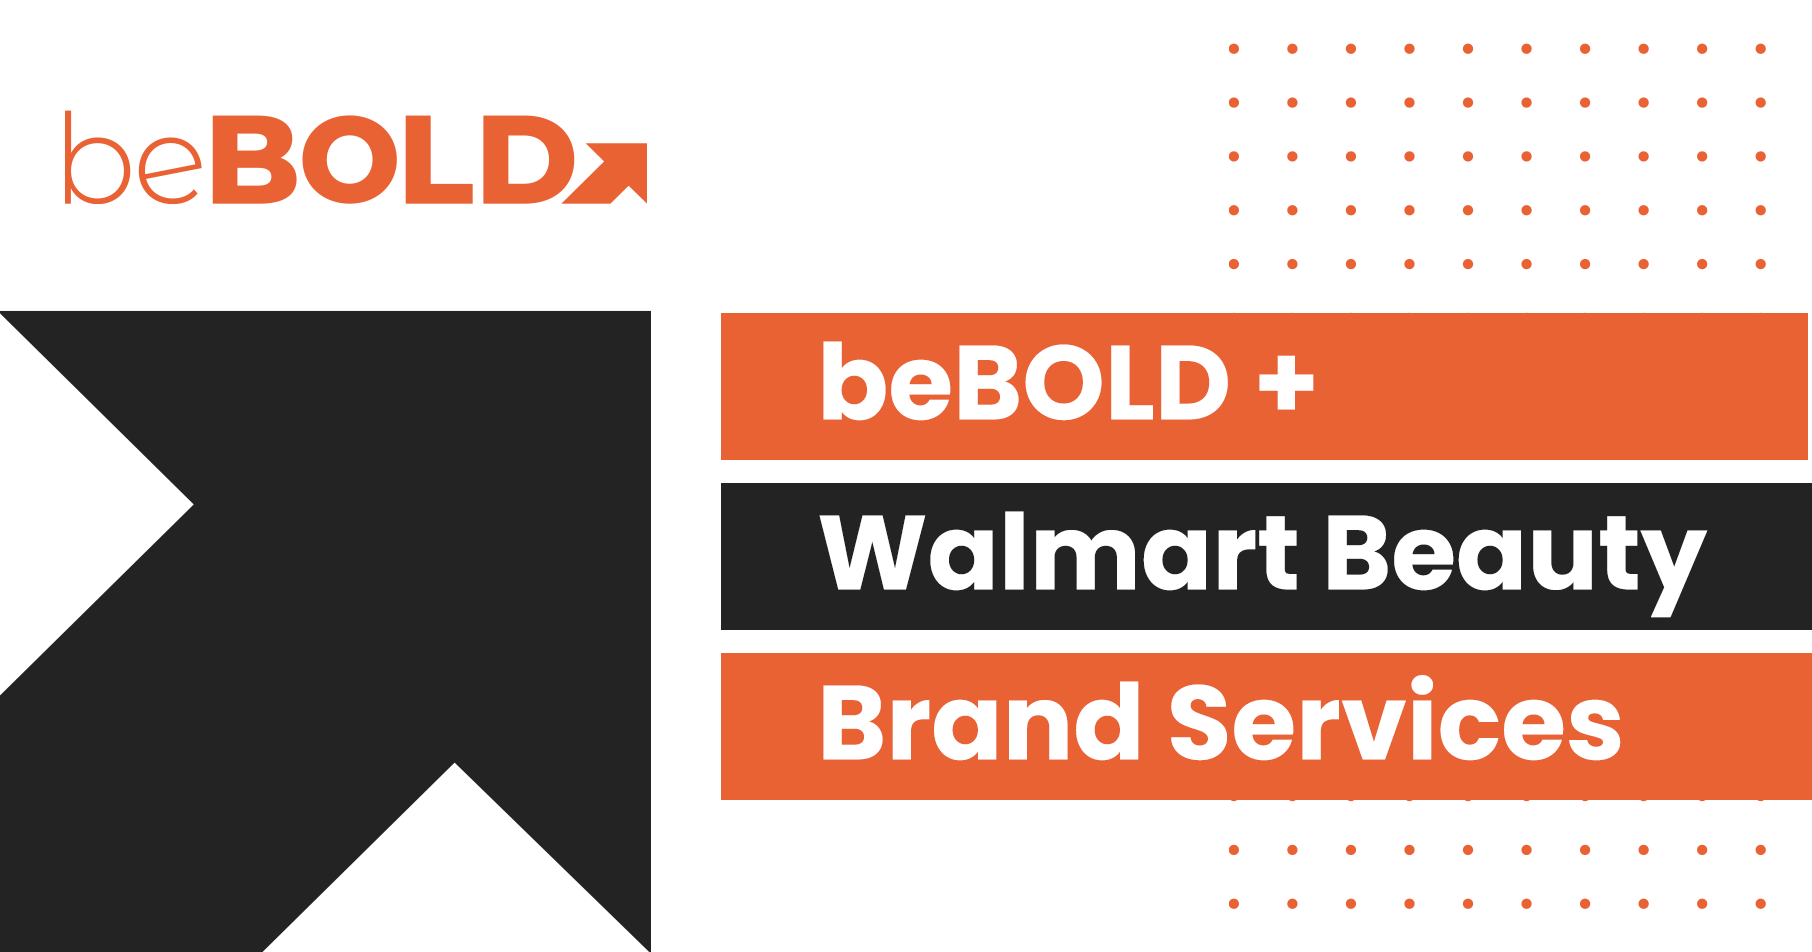 bebold walmart beauty brand services